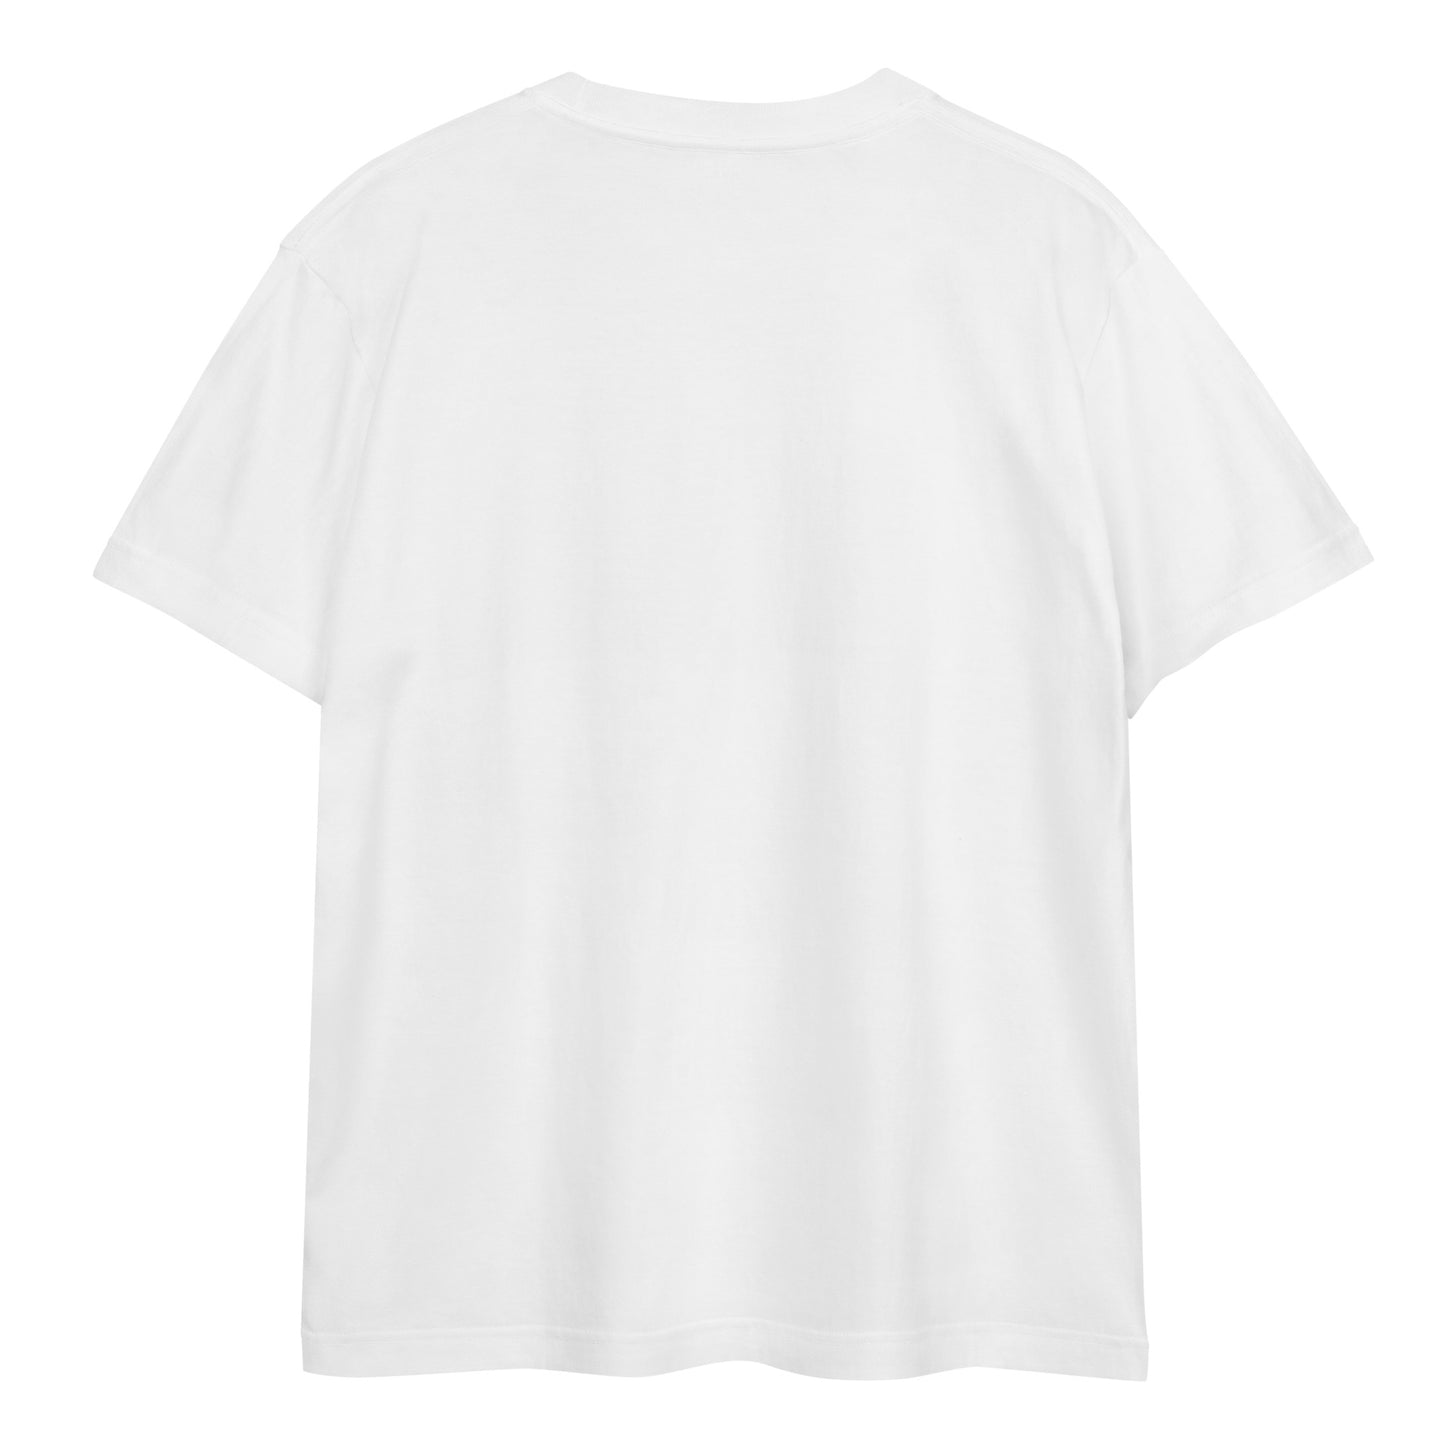 KAMOS FACE  T-shirt| BLACK/WHITE